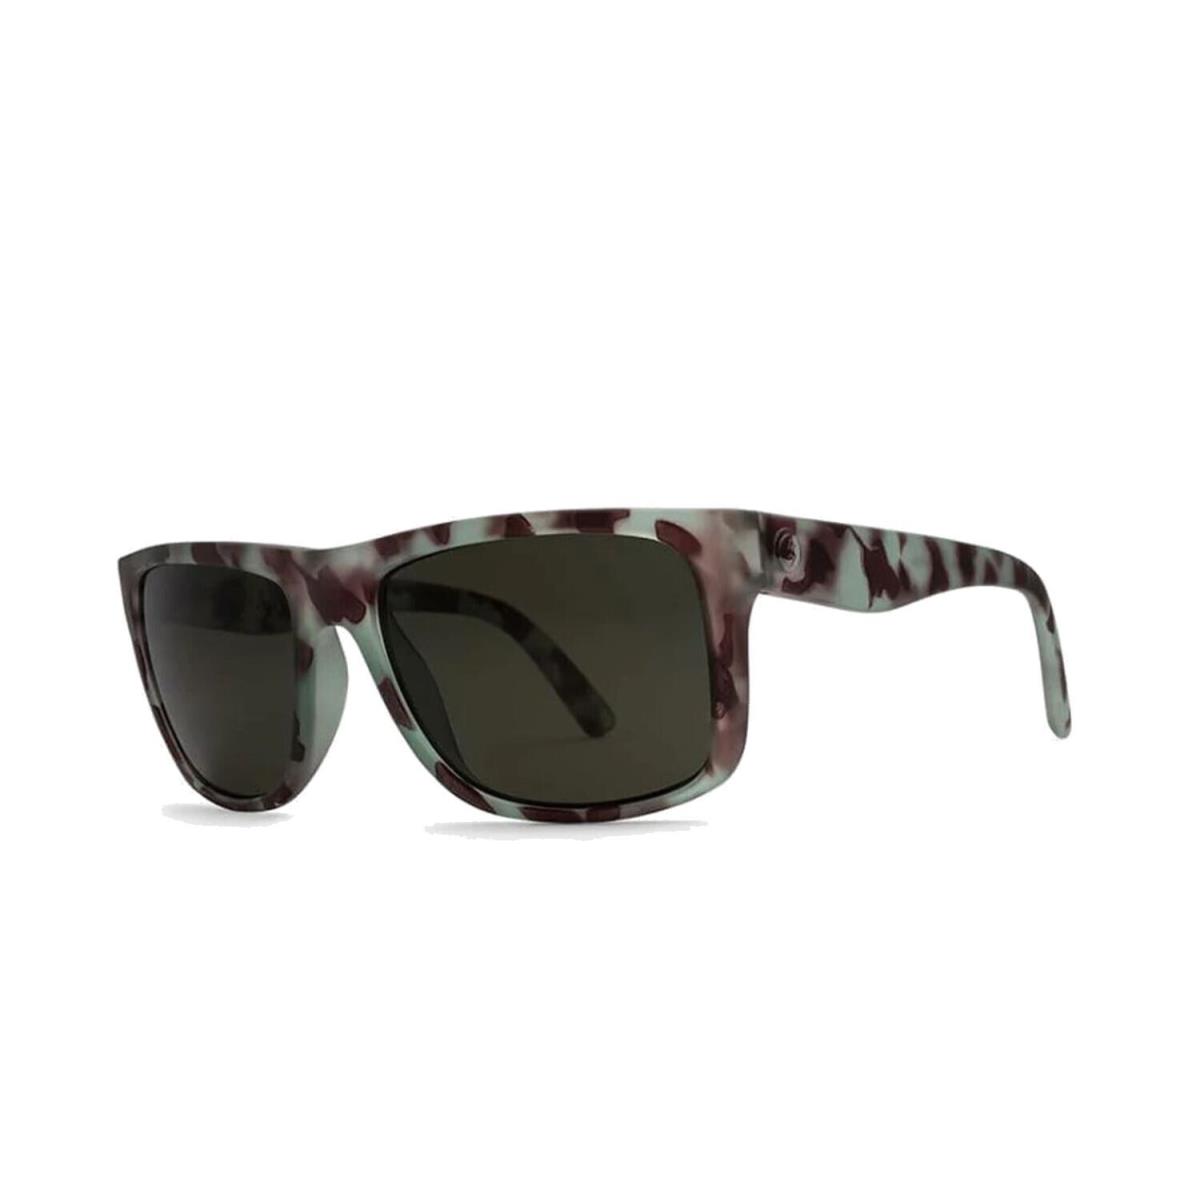 Electric Swingarm Sunglasses Gulf Tort with Grey Polarized Lens